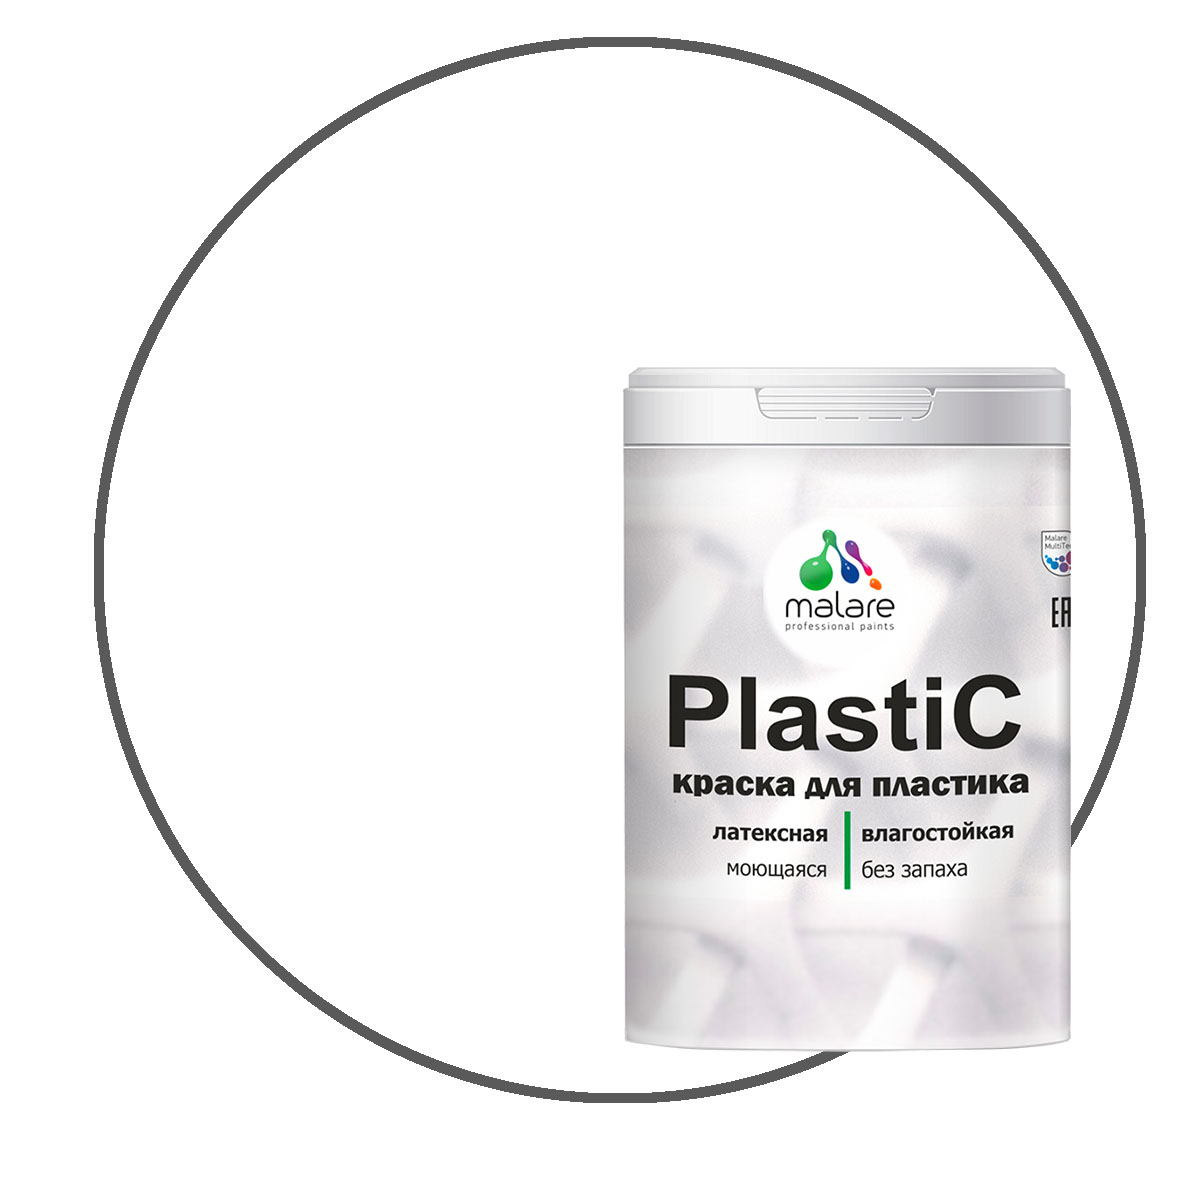 краска malare plastic для пластика пвх для сайдинга летний бриз 1 кг Краска Malare PlastiC для пластика, ПВХ, для сайдинга, белый 1 кг